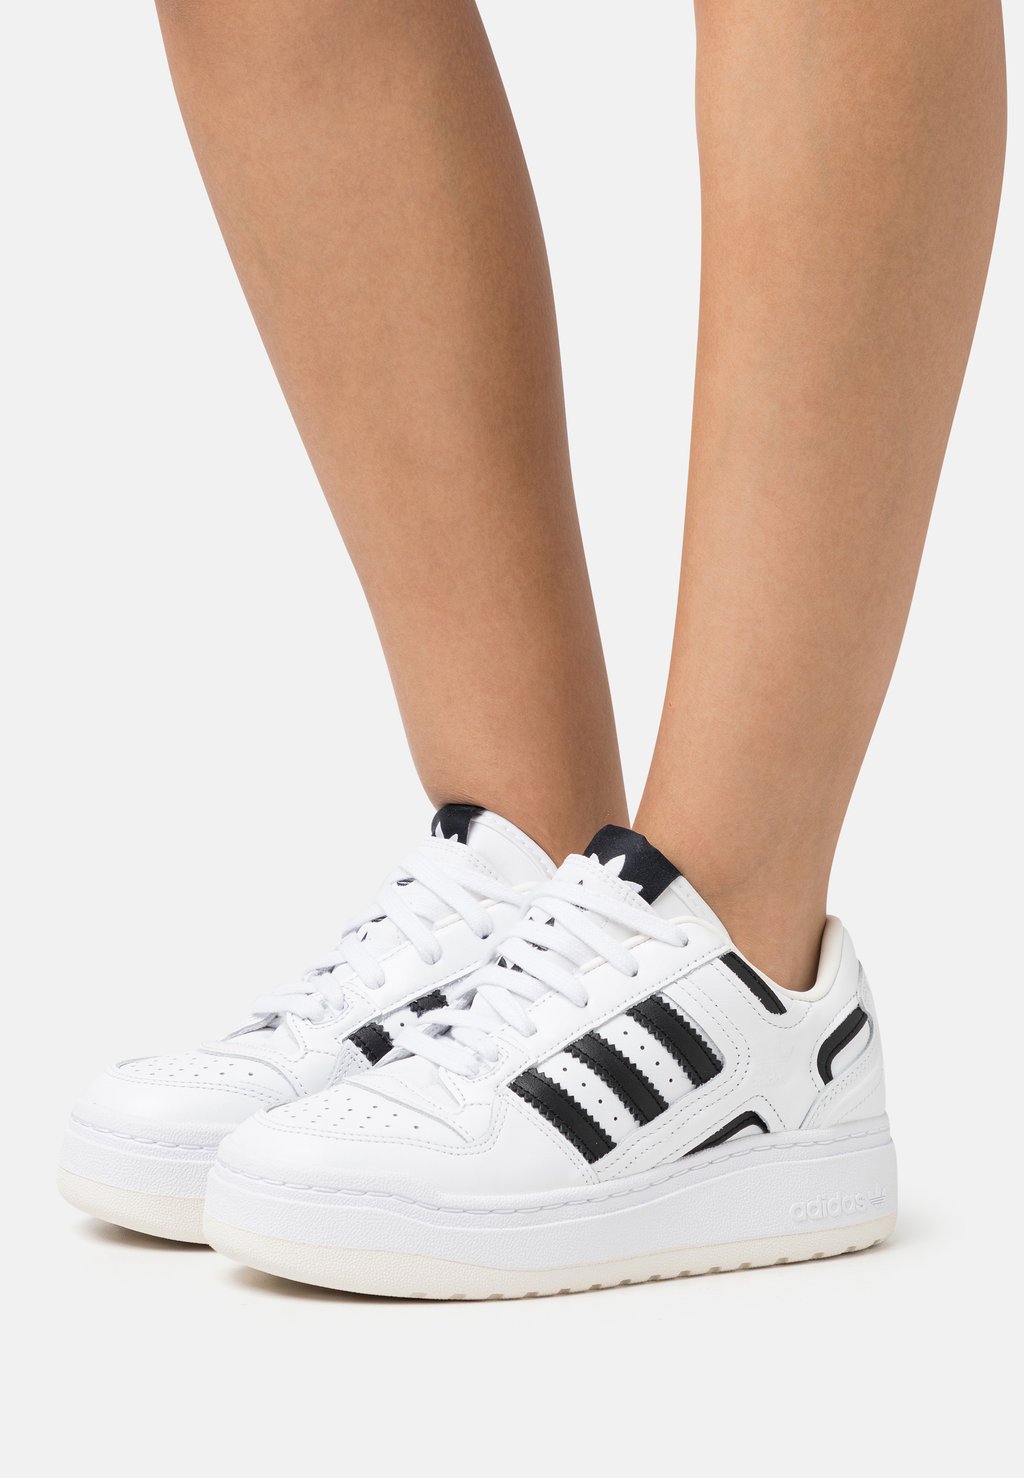 Кроссовки adidas Originals кроссовки adidas originals forum low цвет footwear white footwear white core black